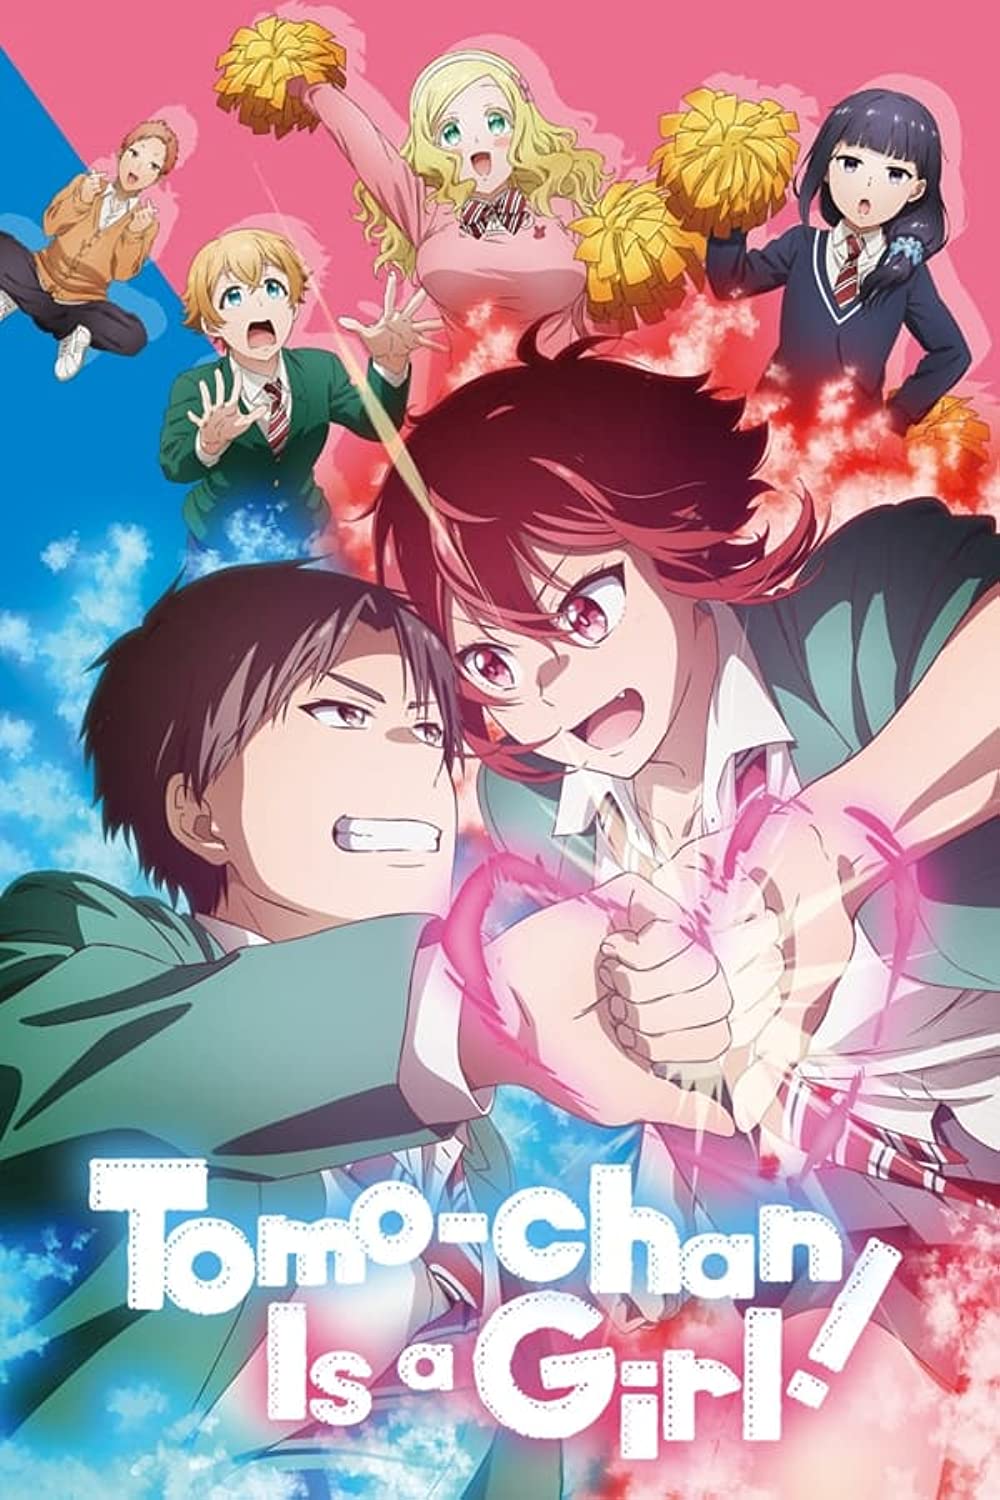 Leadale no Daichi nite - Anime Adaptation Announced - Anime Ignite